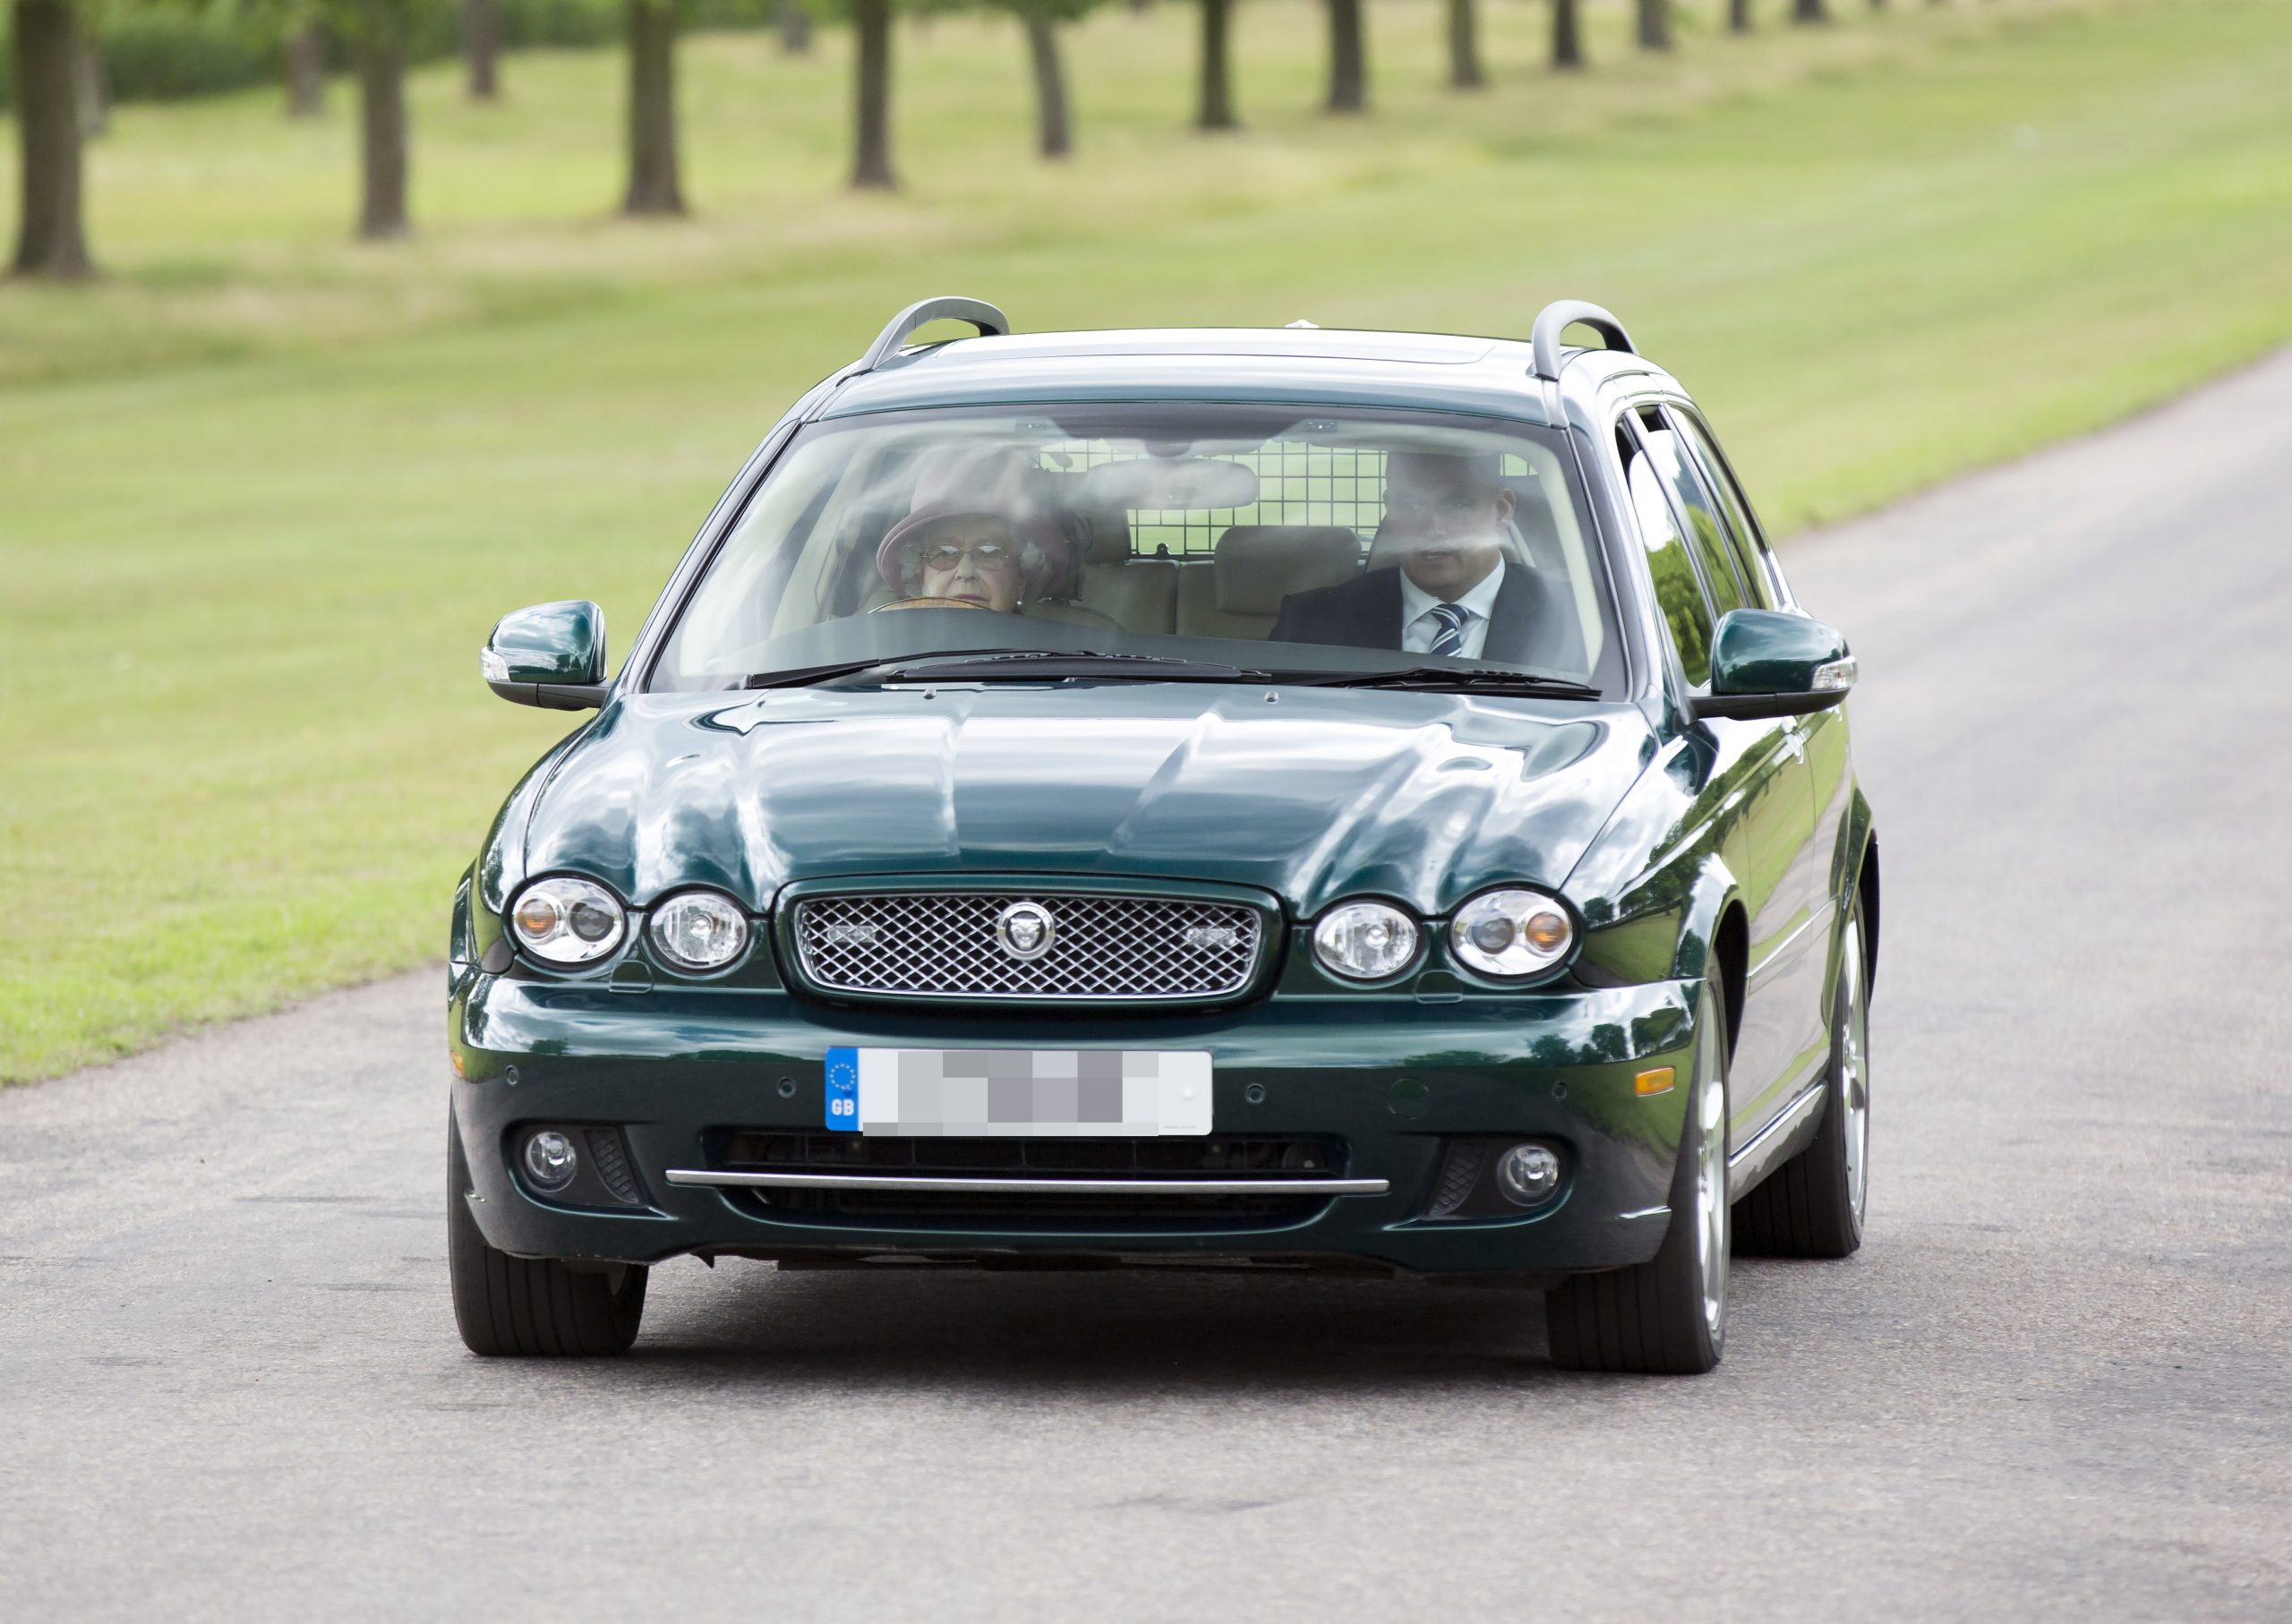 Royal runaround: Queen Elizabeth II's Jaguar X-Type Estate to be auctioned